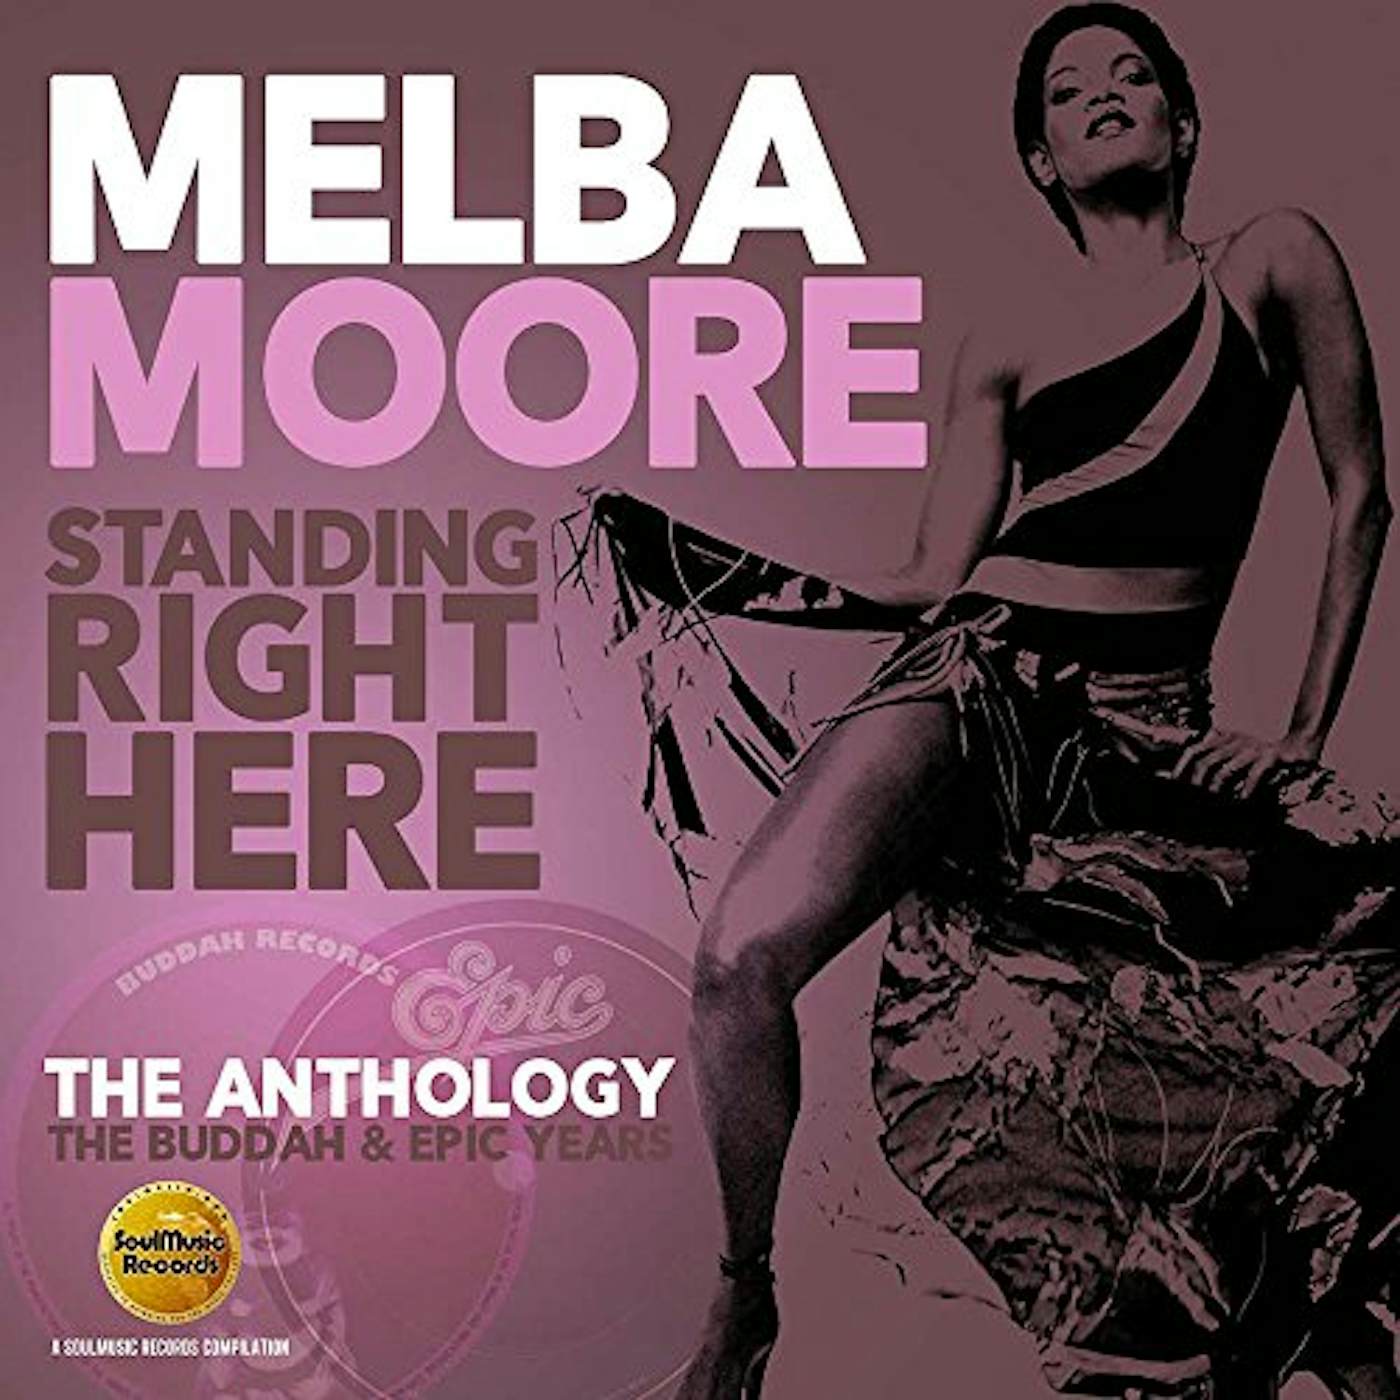 Melba Moore STANDING RIGHT HERE: ANTHOLOGY - BUDDAH & EPIC CD